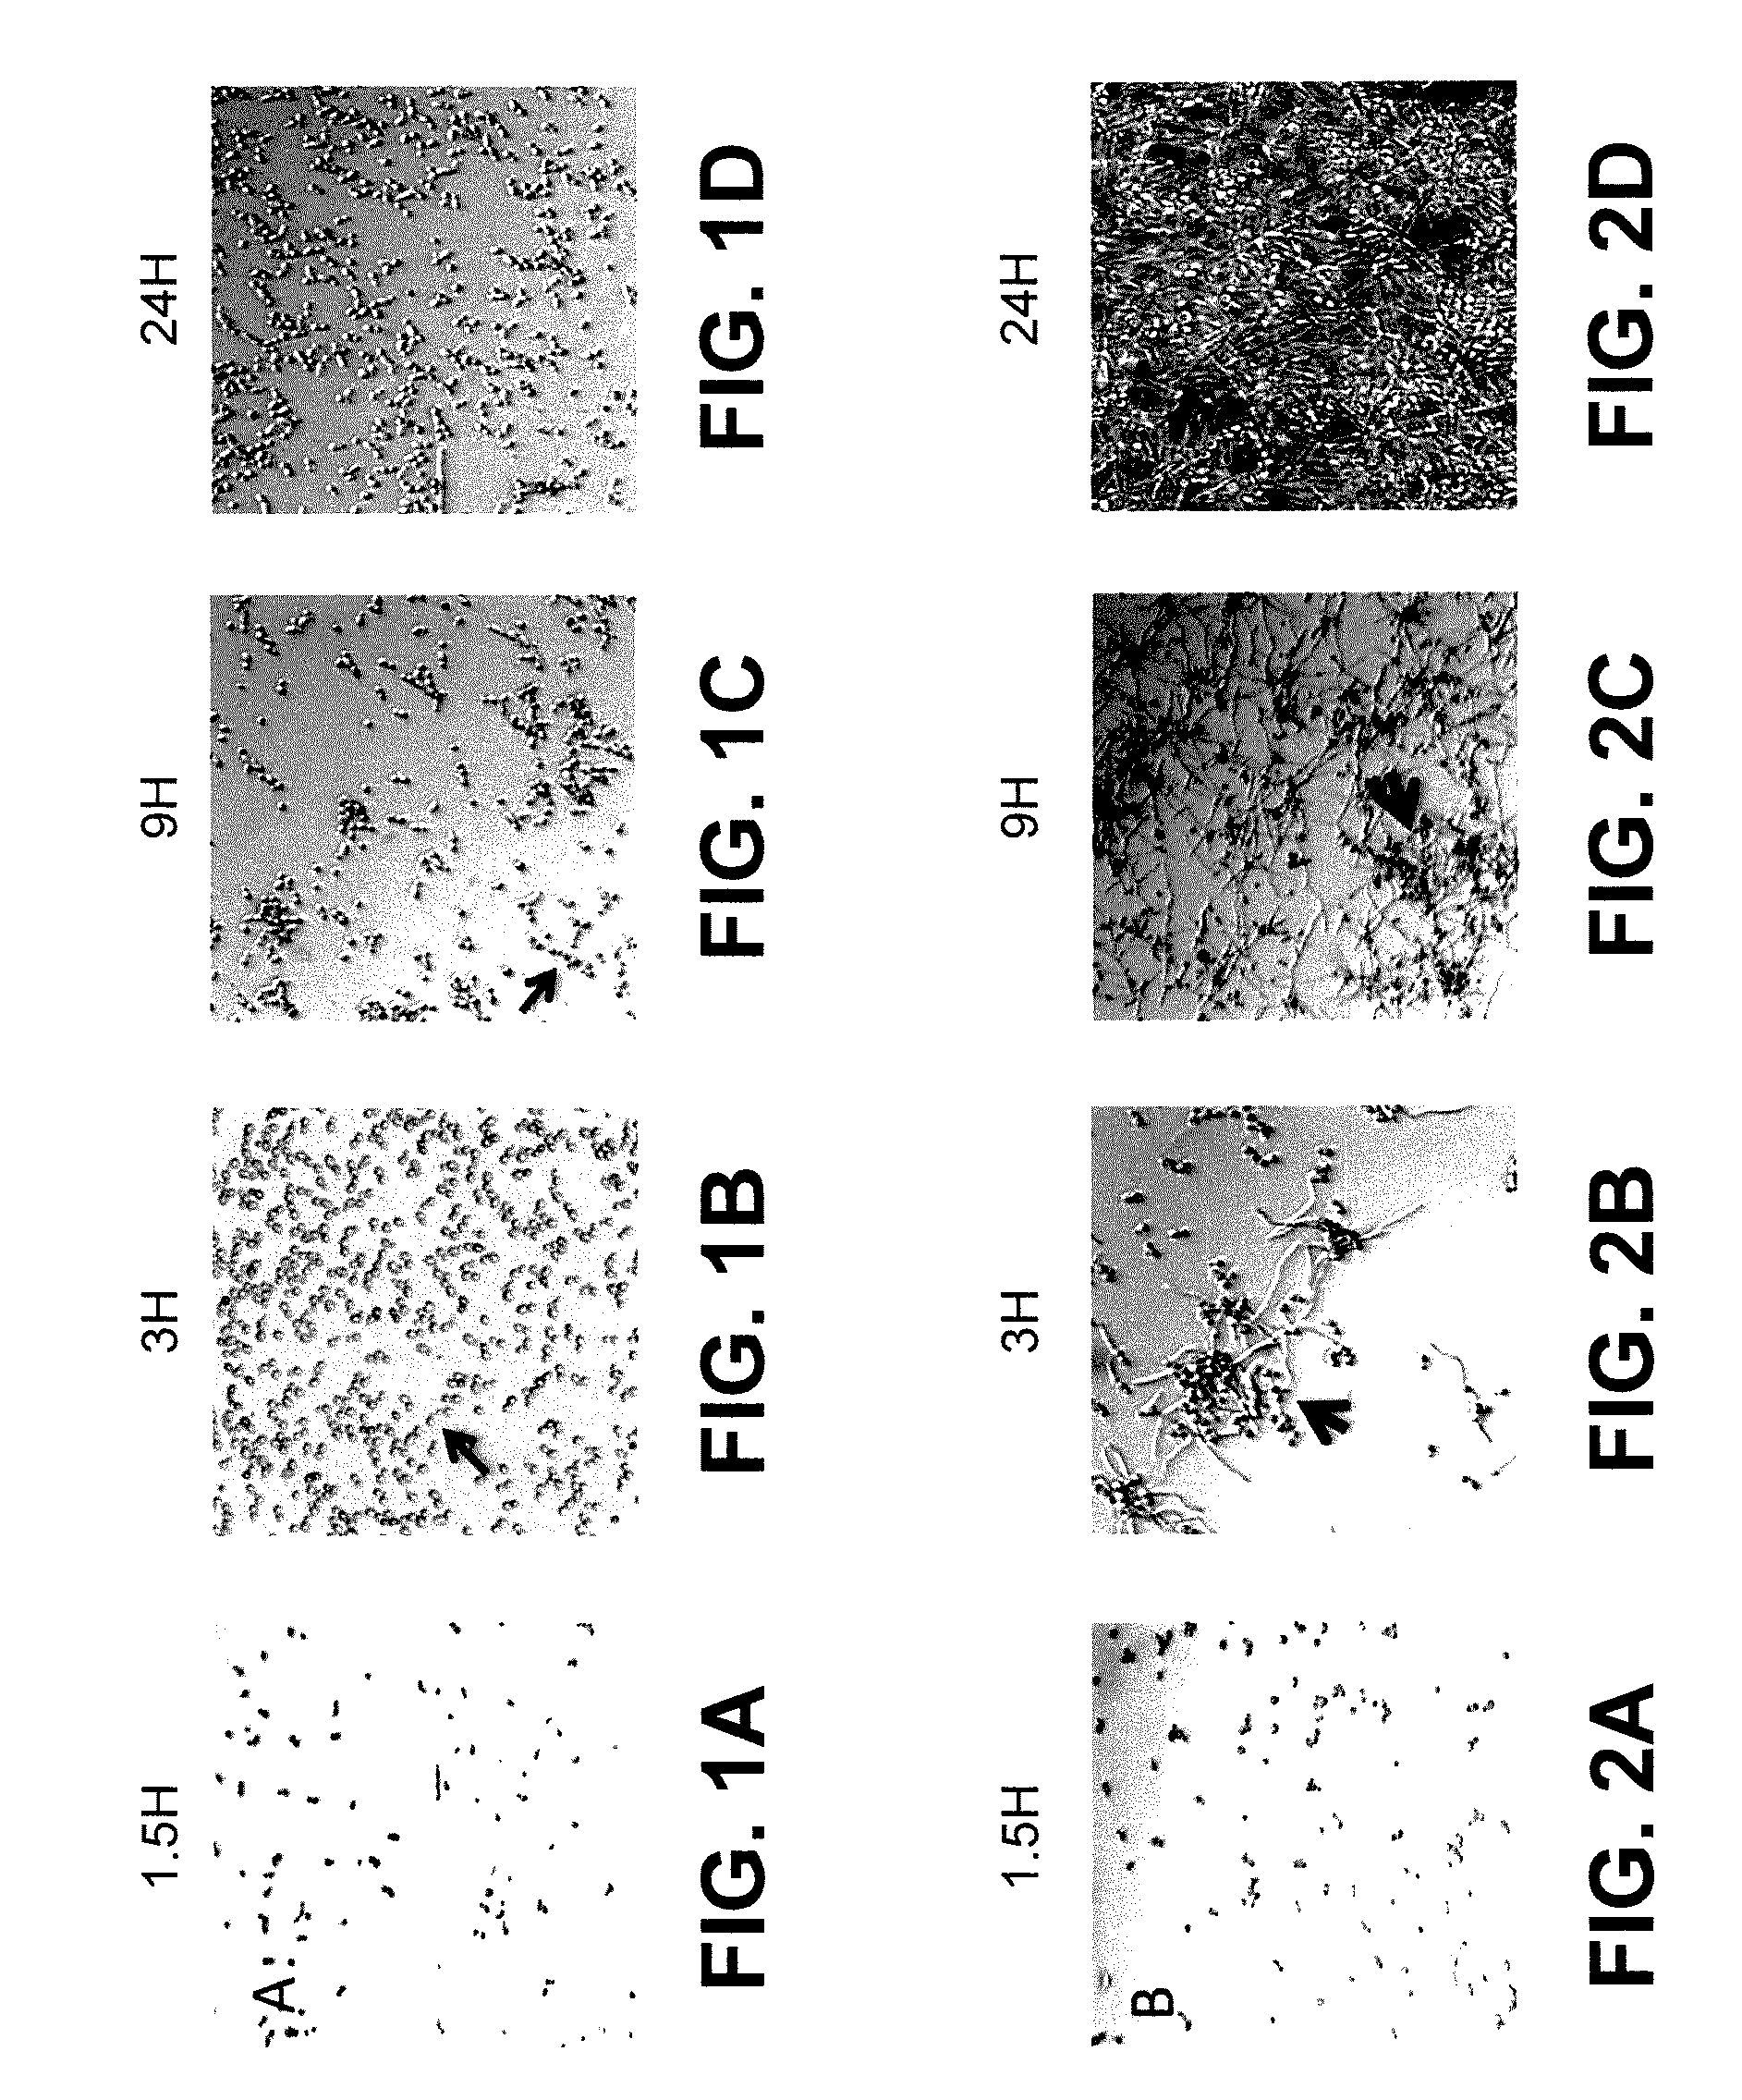 Method of inhibiting biofilm formation